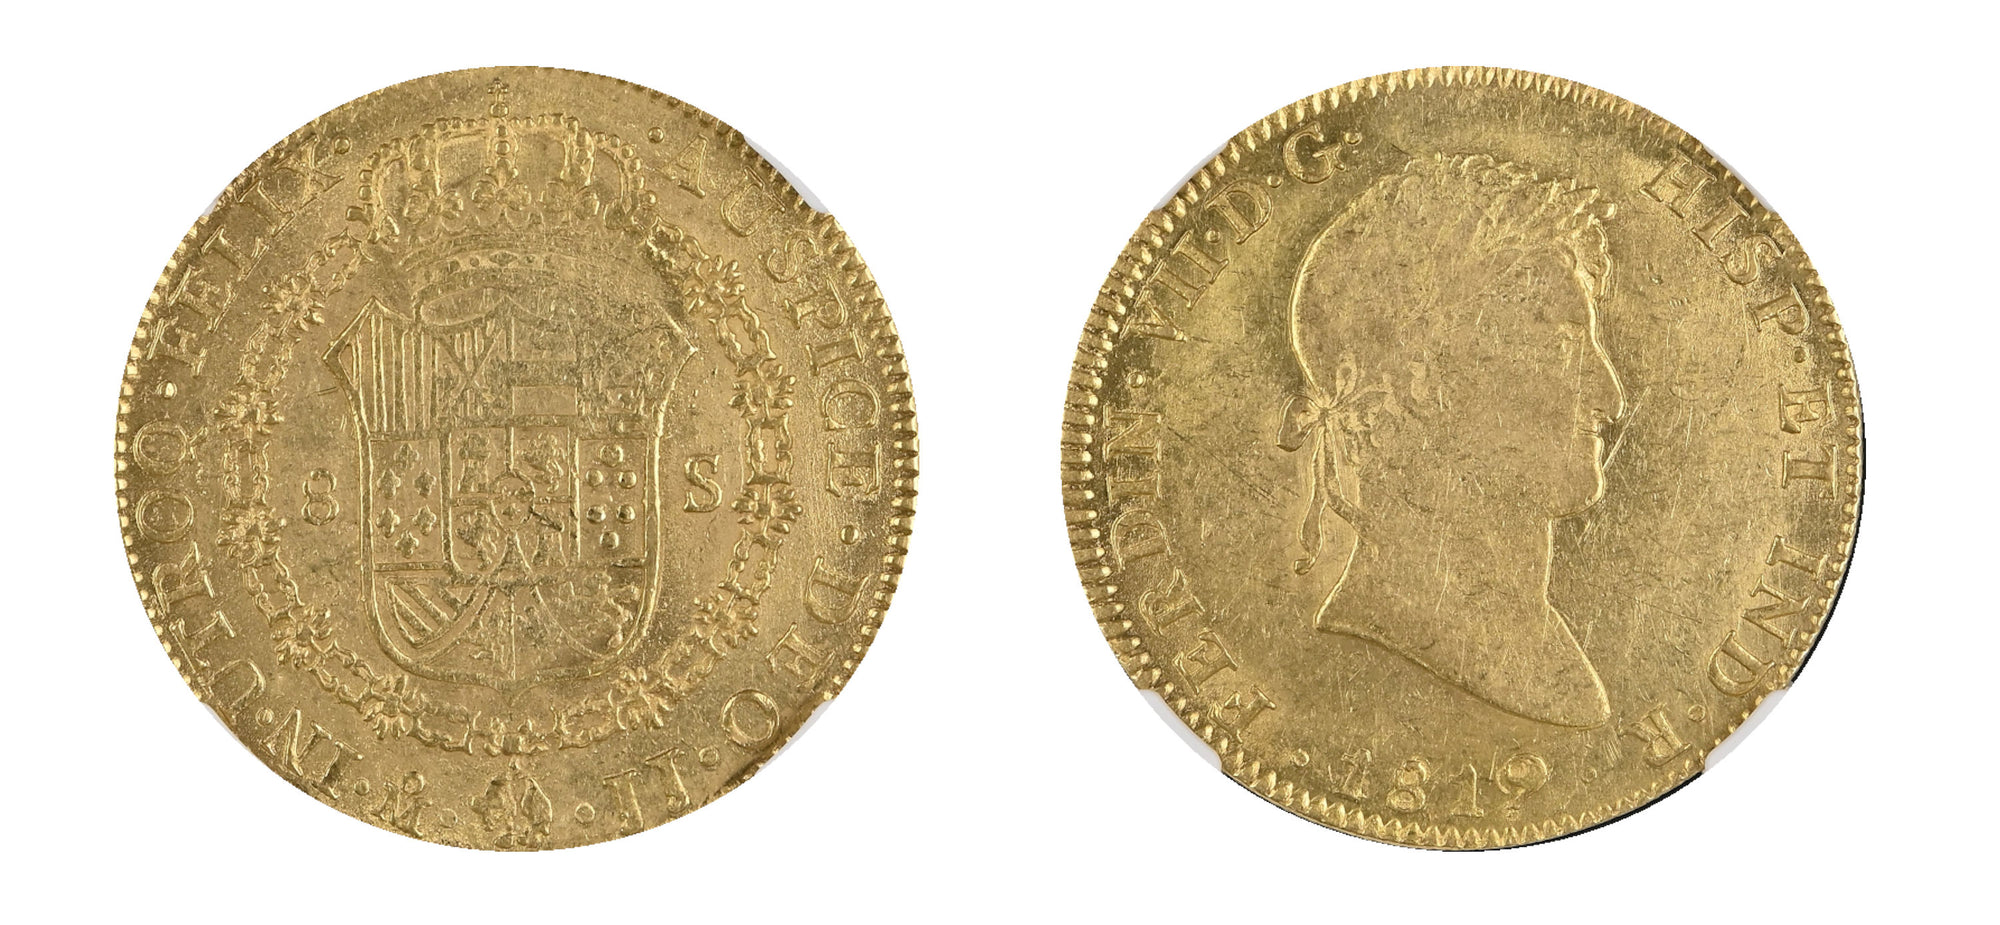 1819MO JJ Gold 8 Escudos King Ferdinand VII NGC AU58 - Hard Asset Management, Inc